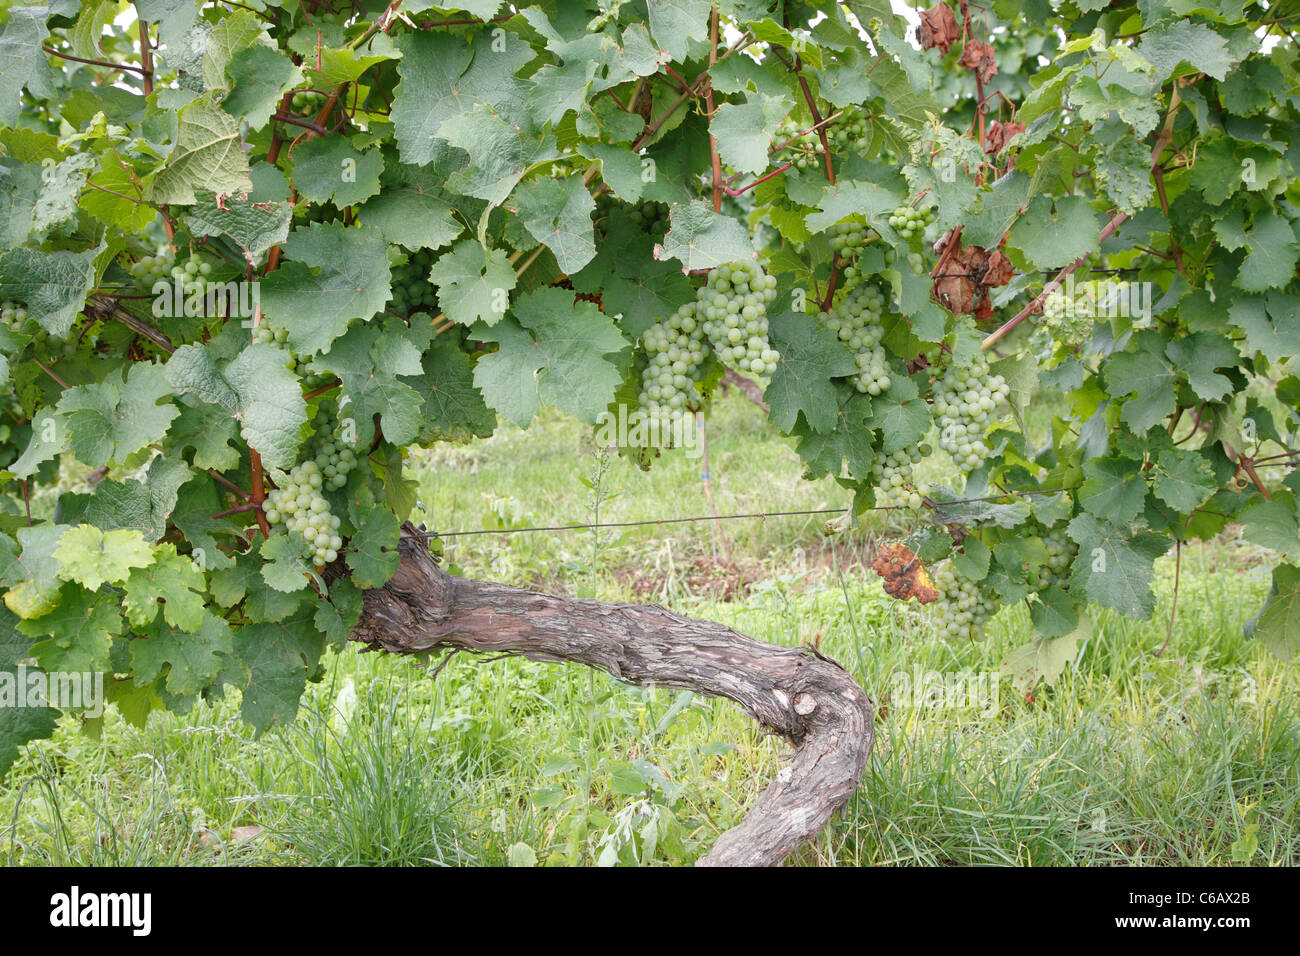 Grape vines, Johannisberg Castle winery vineyard, Rhine valley river district, Germany Stock Photo